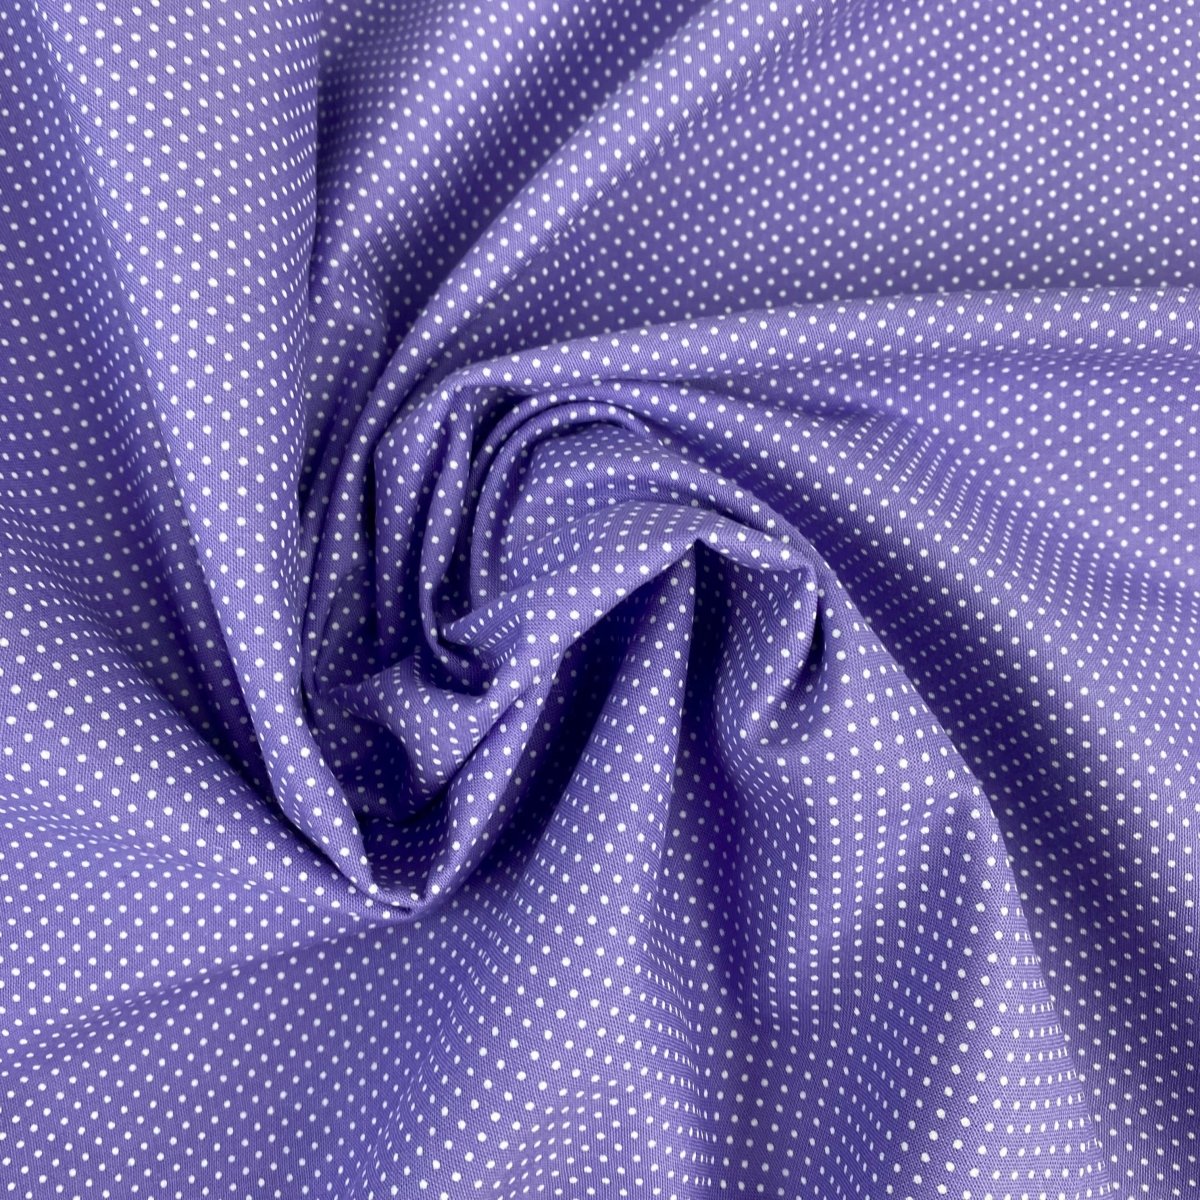 Sew Easy - Micro Dots - Light Purple - Sewing Gem